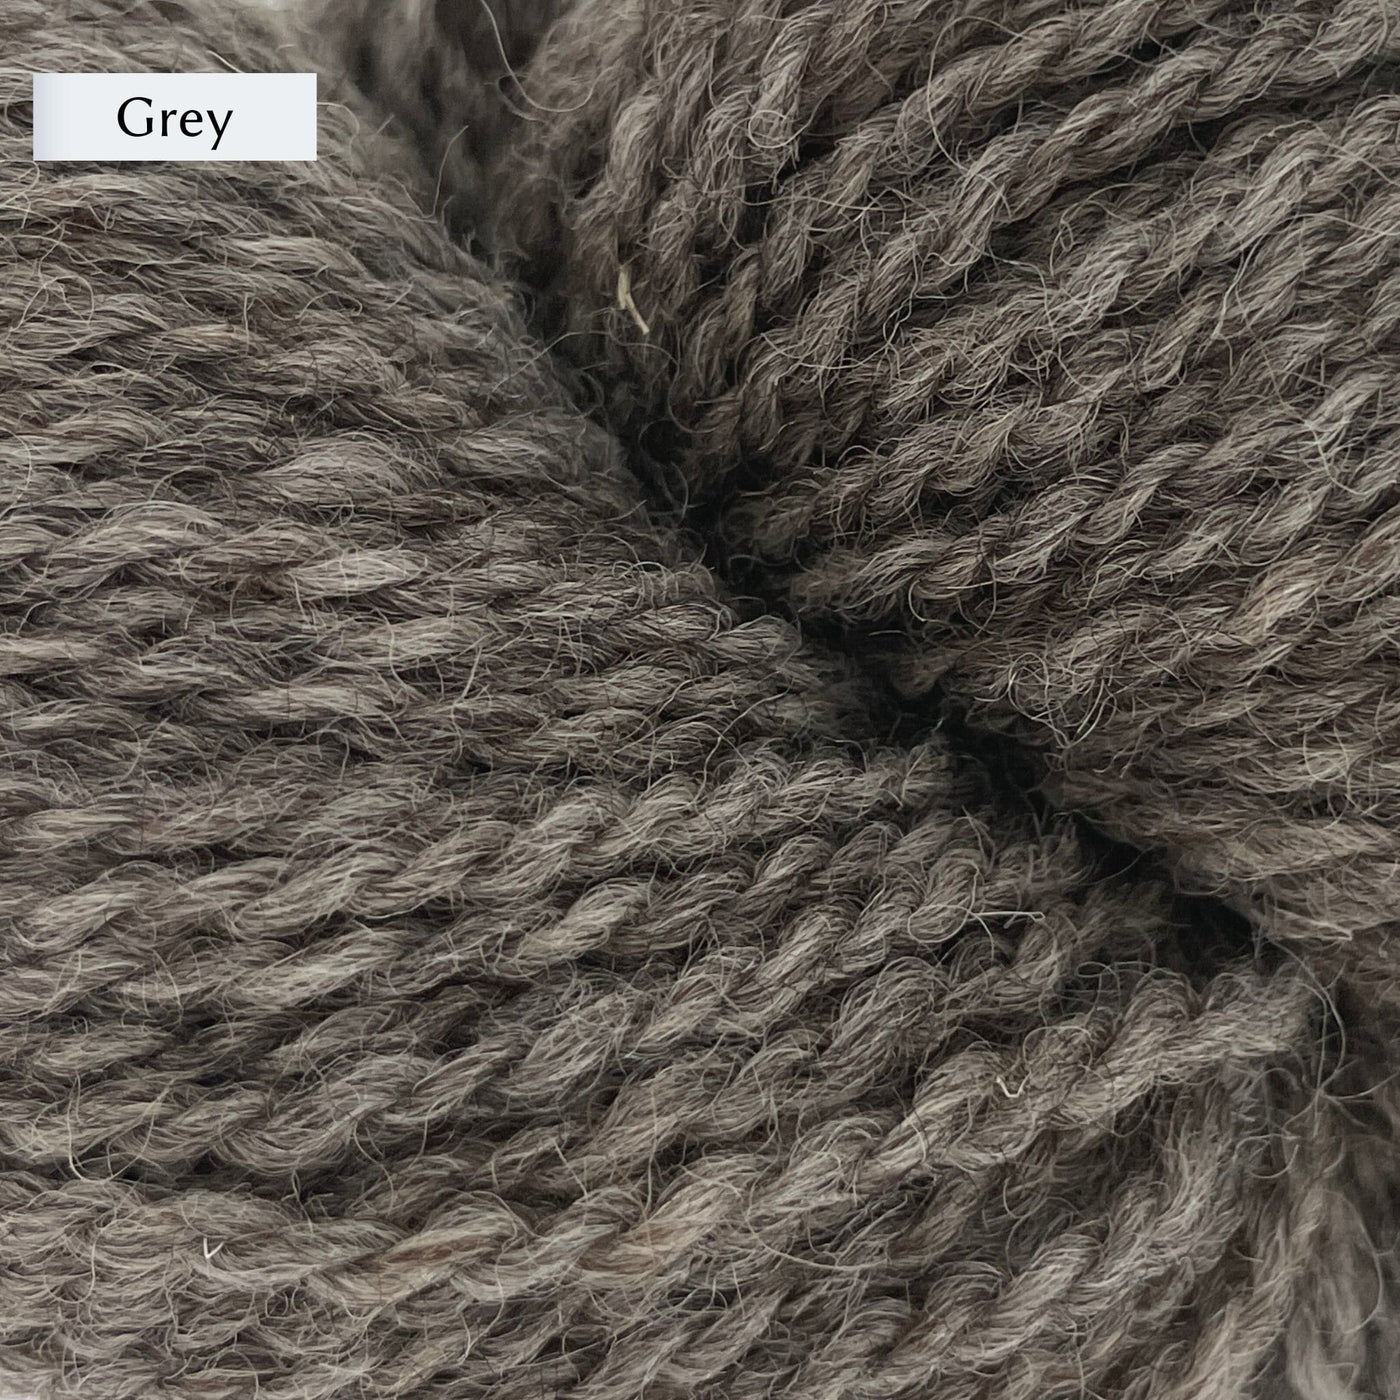 Junction Fiber Mill Farm Fresh yarn, DK weight, in color Grey, a heathered mid-grey